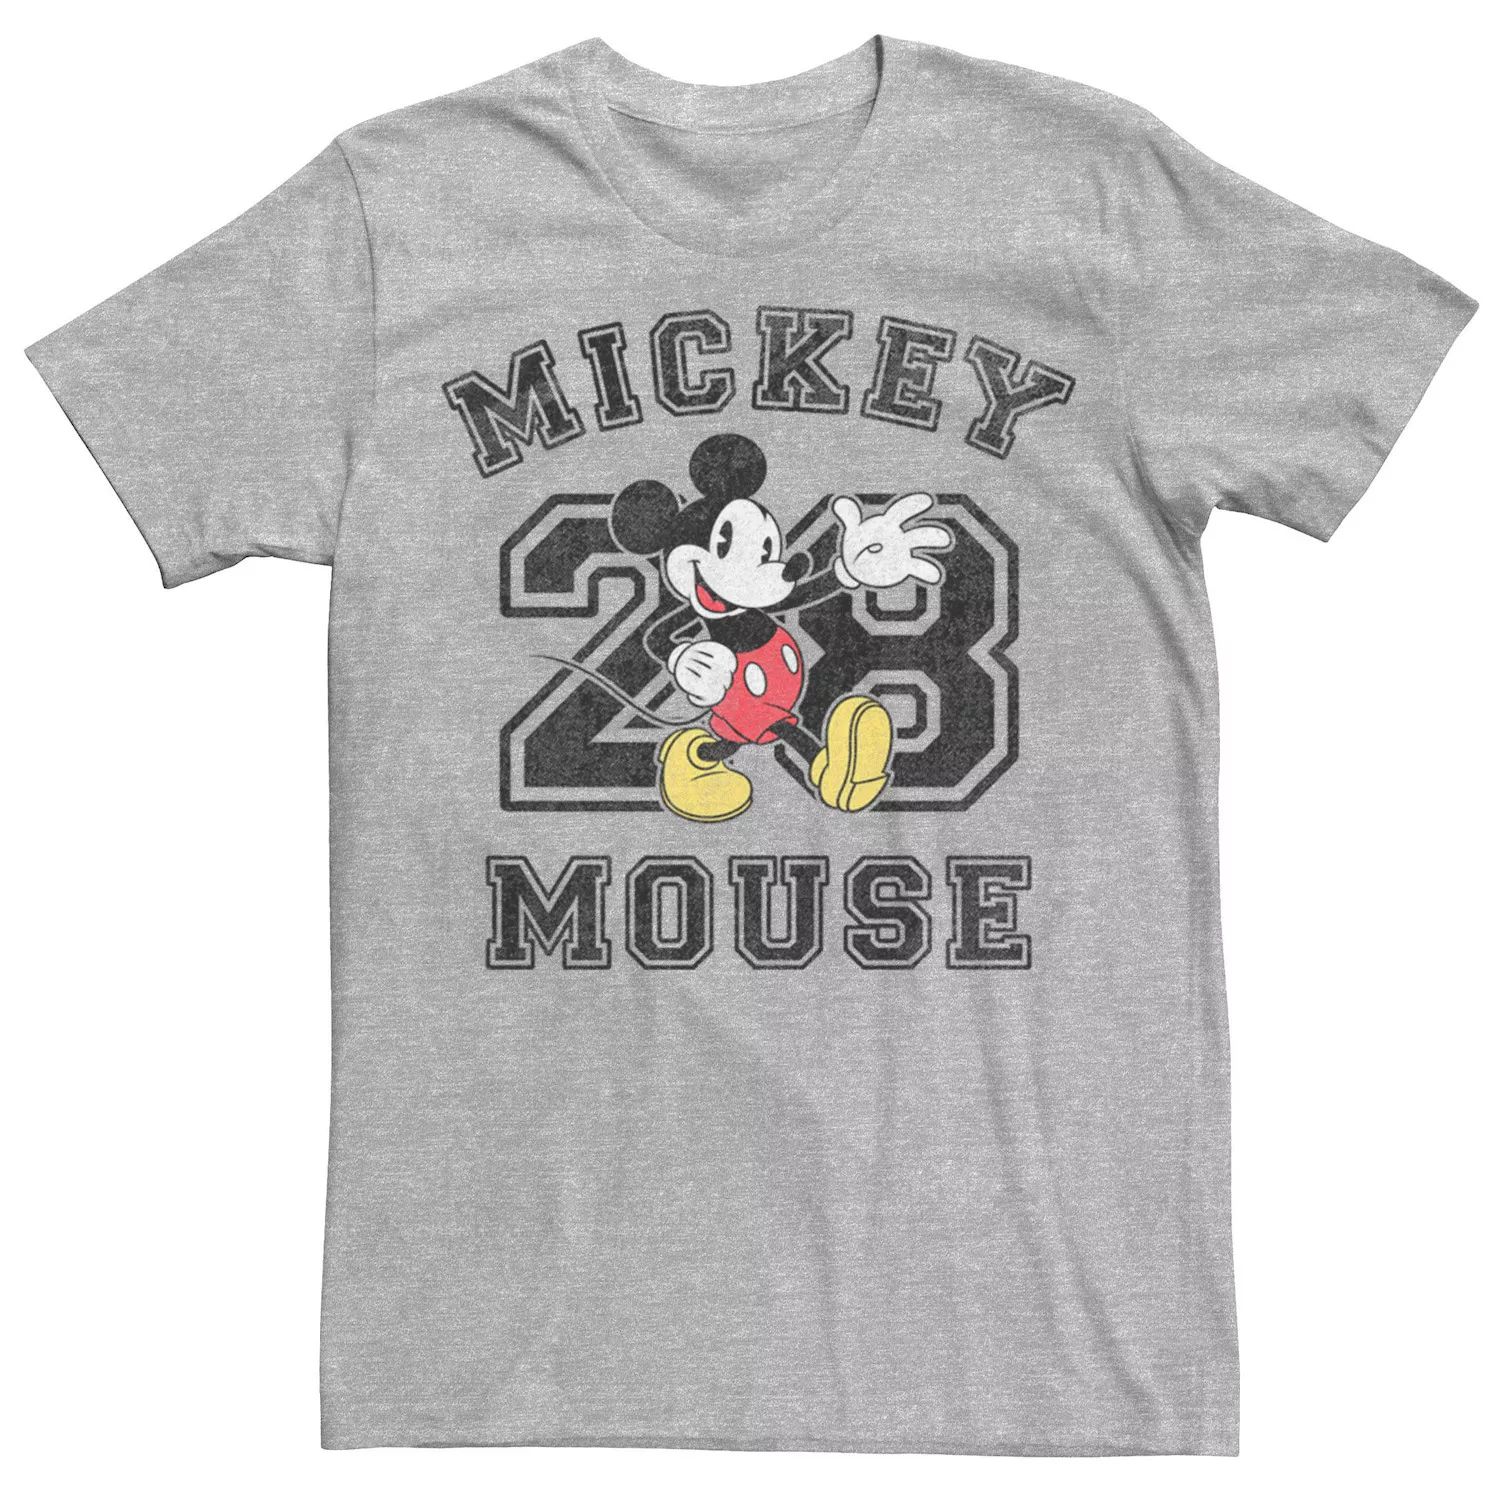 Мужская футболка Disney Mickey Varsity Text #28 с портретом Licensed Character мужская футболка с портретом disney epic mickey painting licensed character